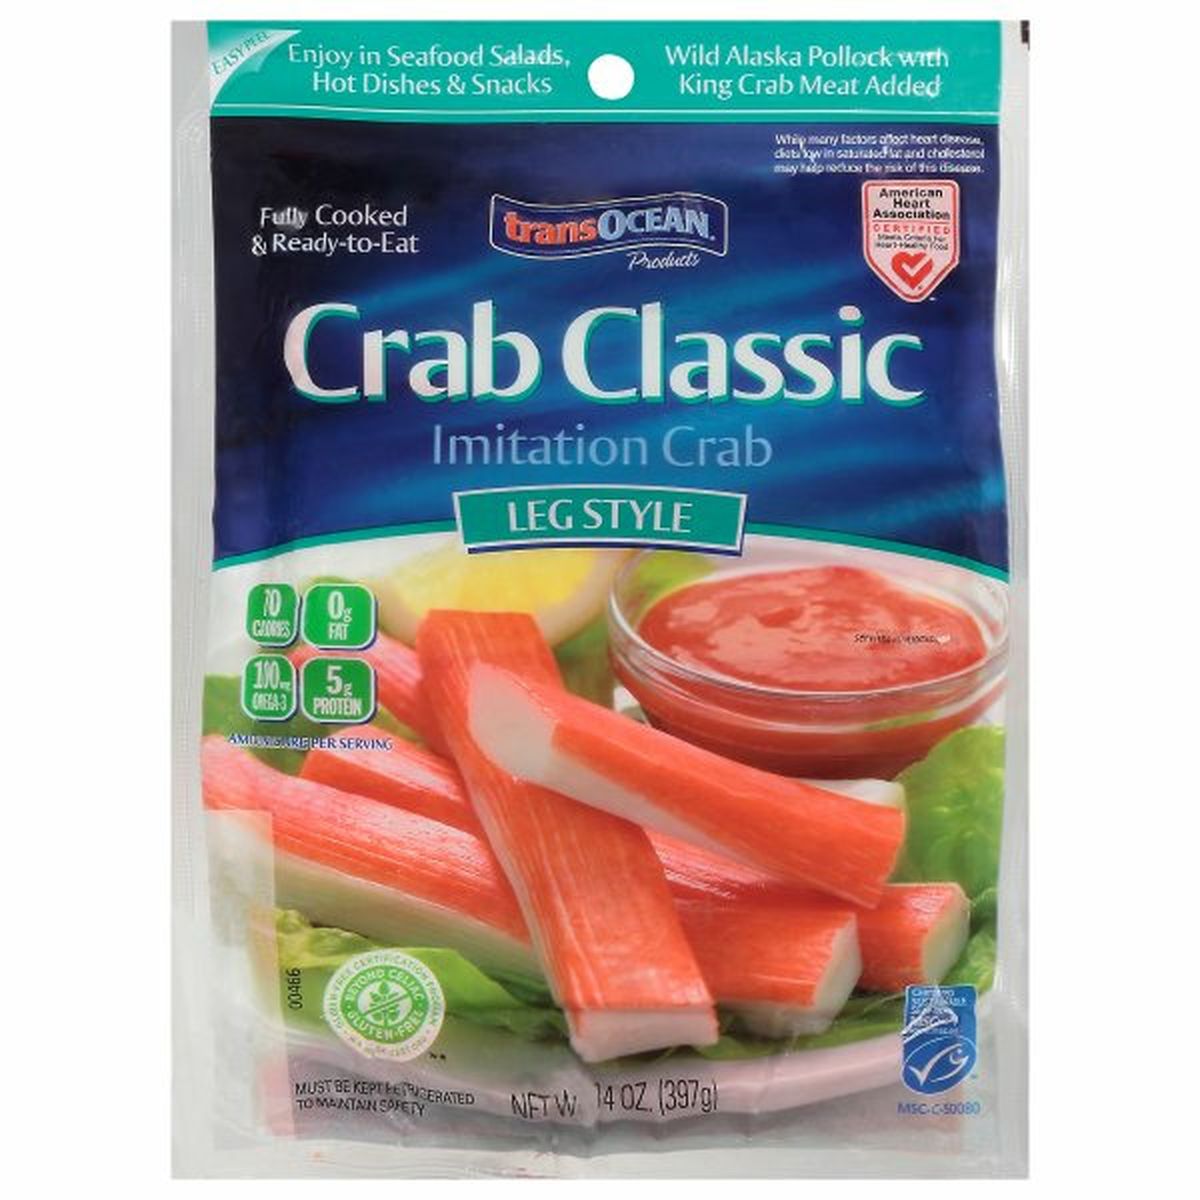 Calories in TransOcean Imitation Crab, Crab Classic, Leg Style